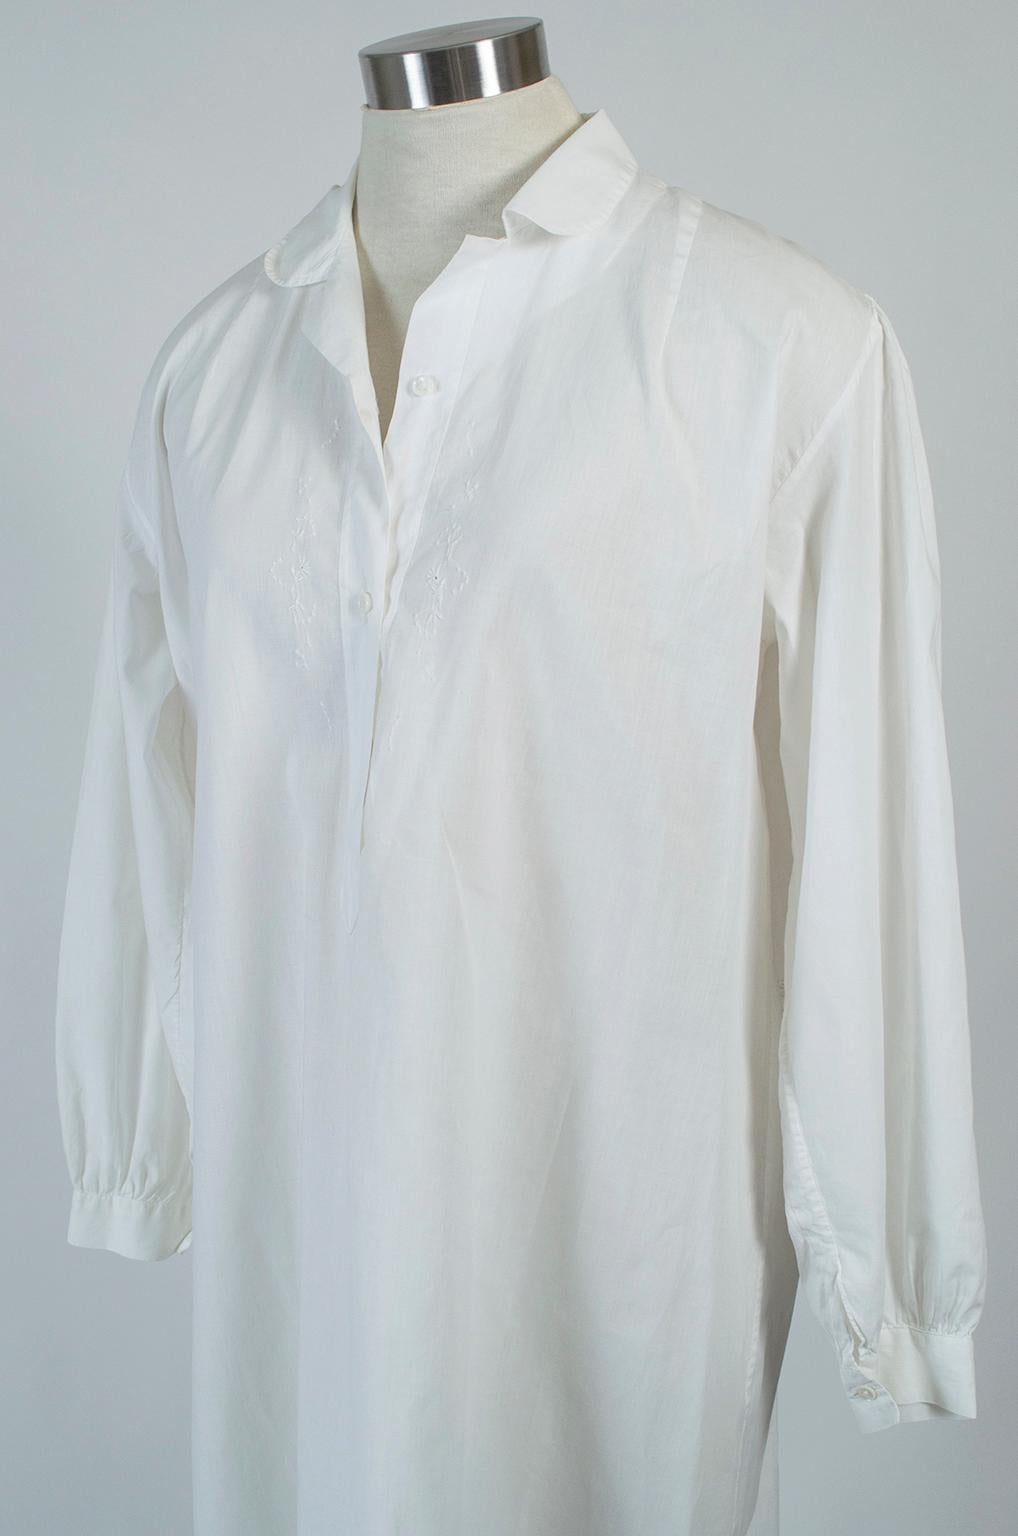 Gray Edwardian White Embroidered Cotton Poplin Nightshirt Sleep Shirt - M, 1910s For Sale